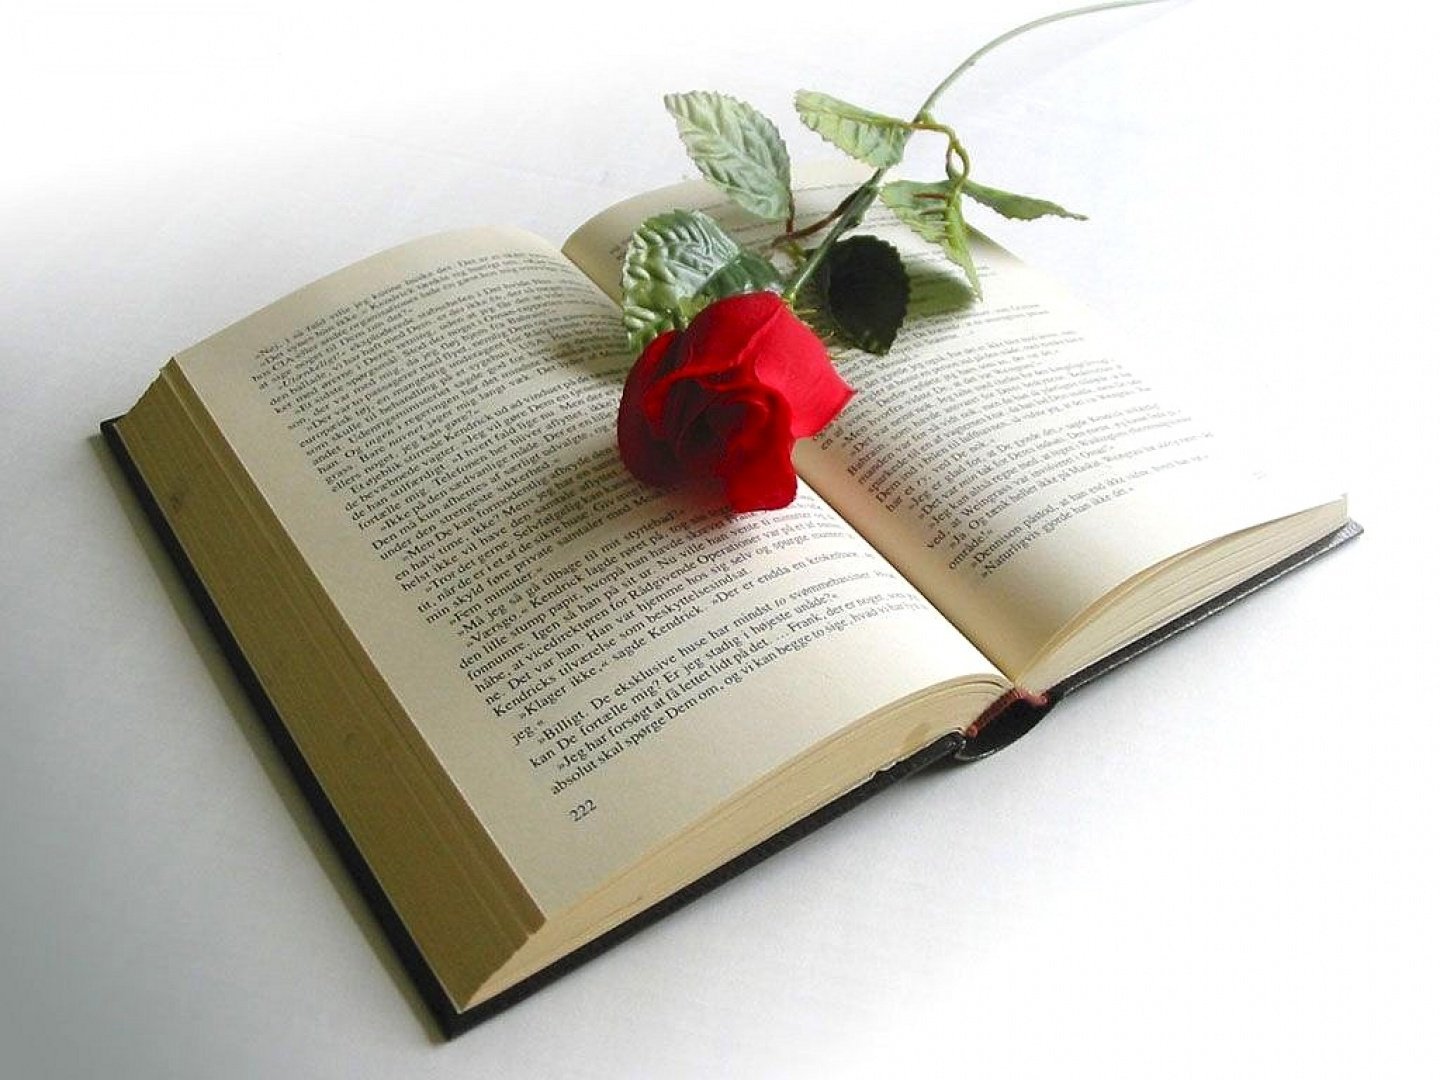 Роза на книге